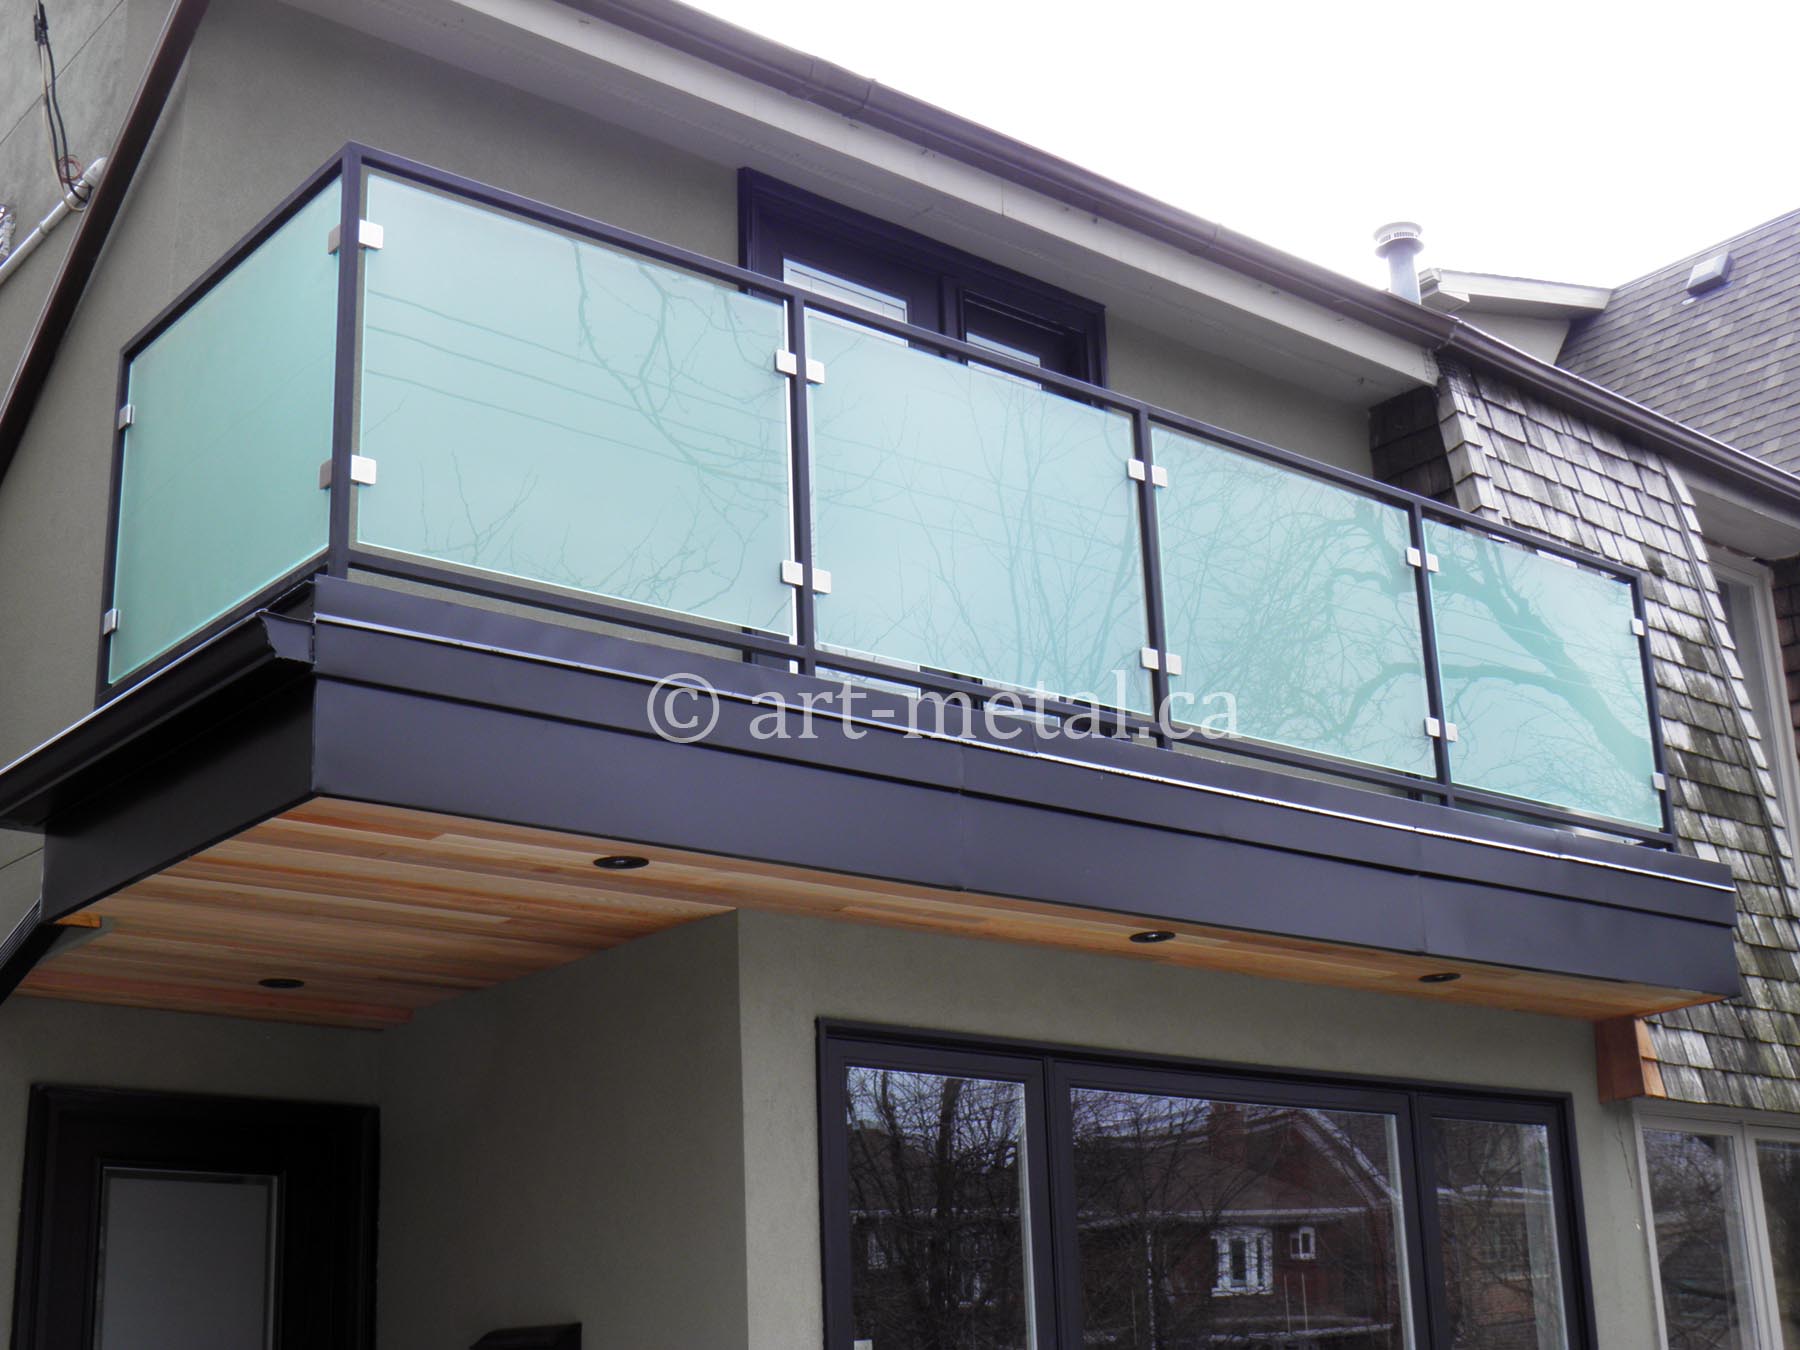 Best Glass Balcony Railings Installation Company in Toronto